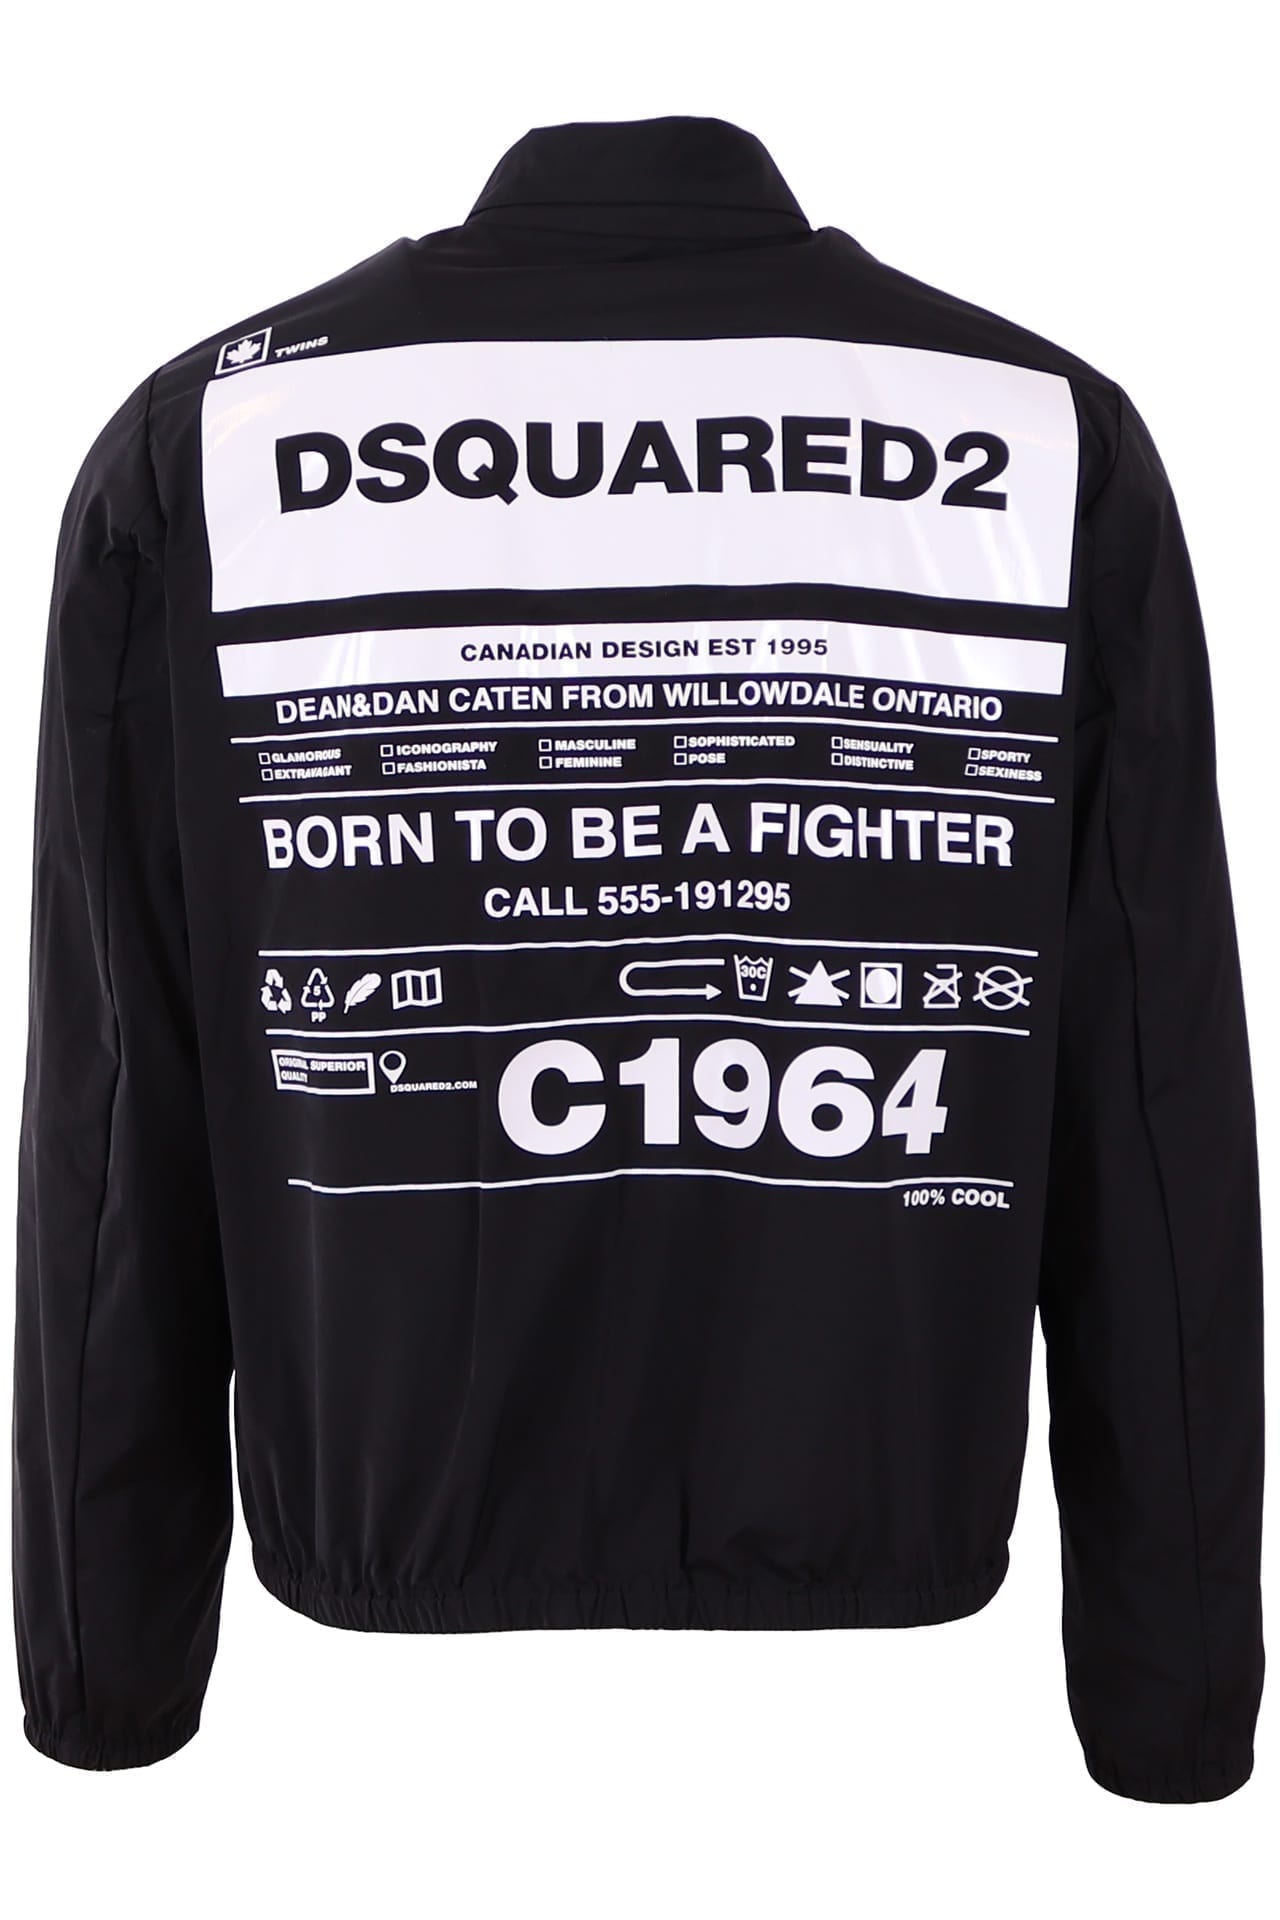 dsquared2 bomber jacket